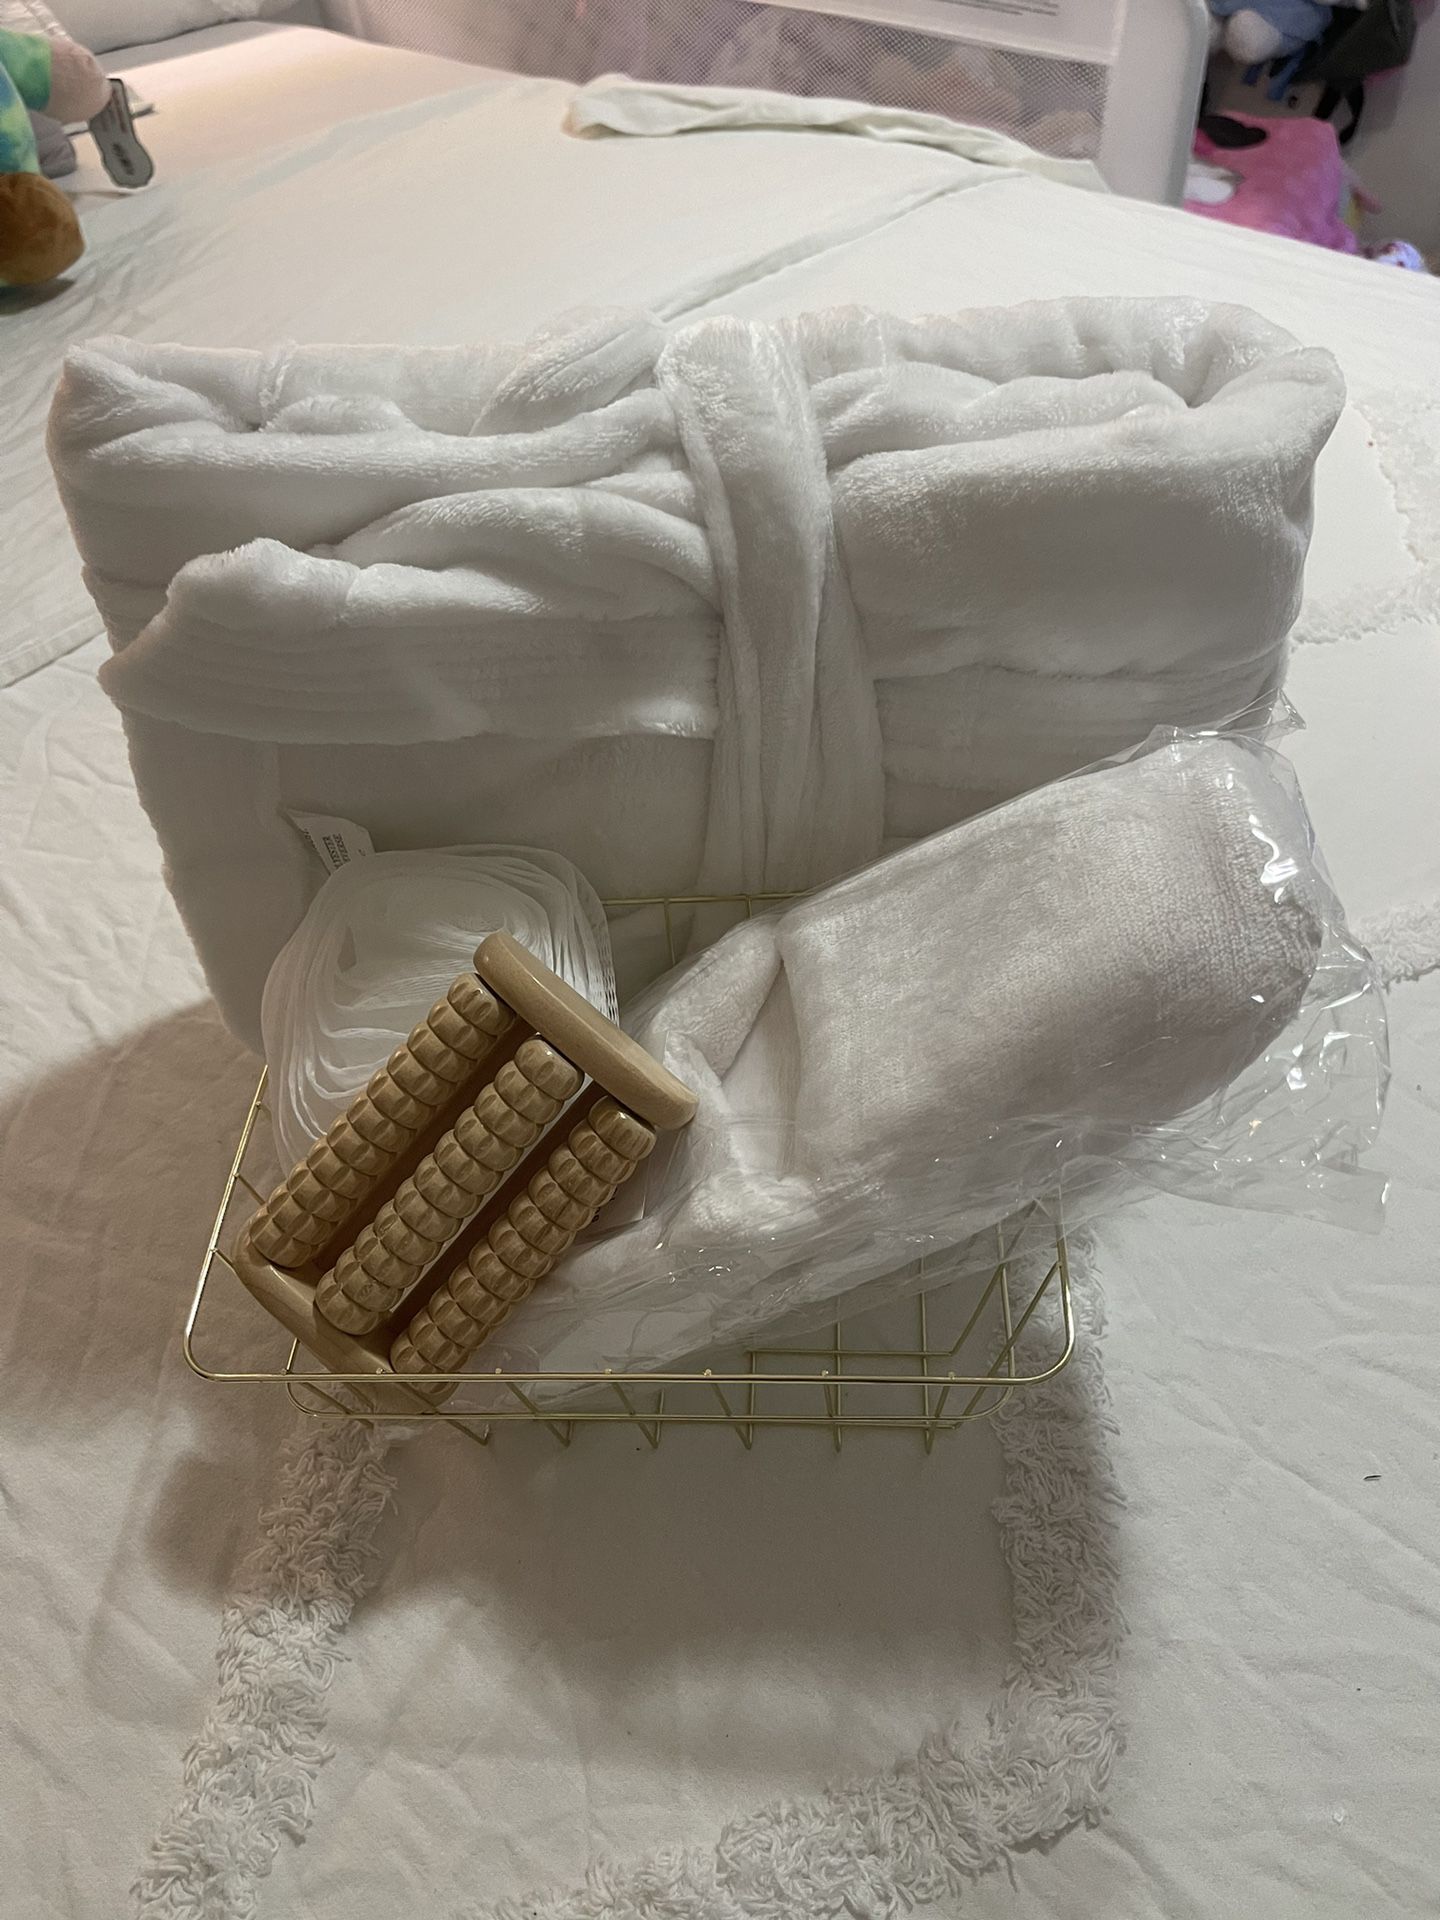 Brand New White Bath Robe And Sleepers $20